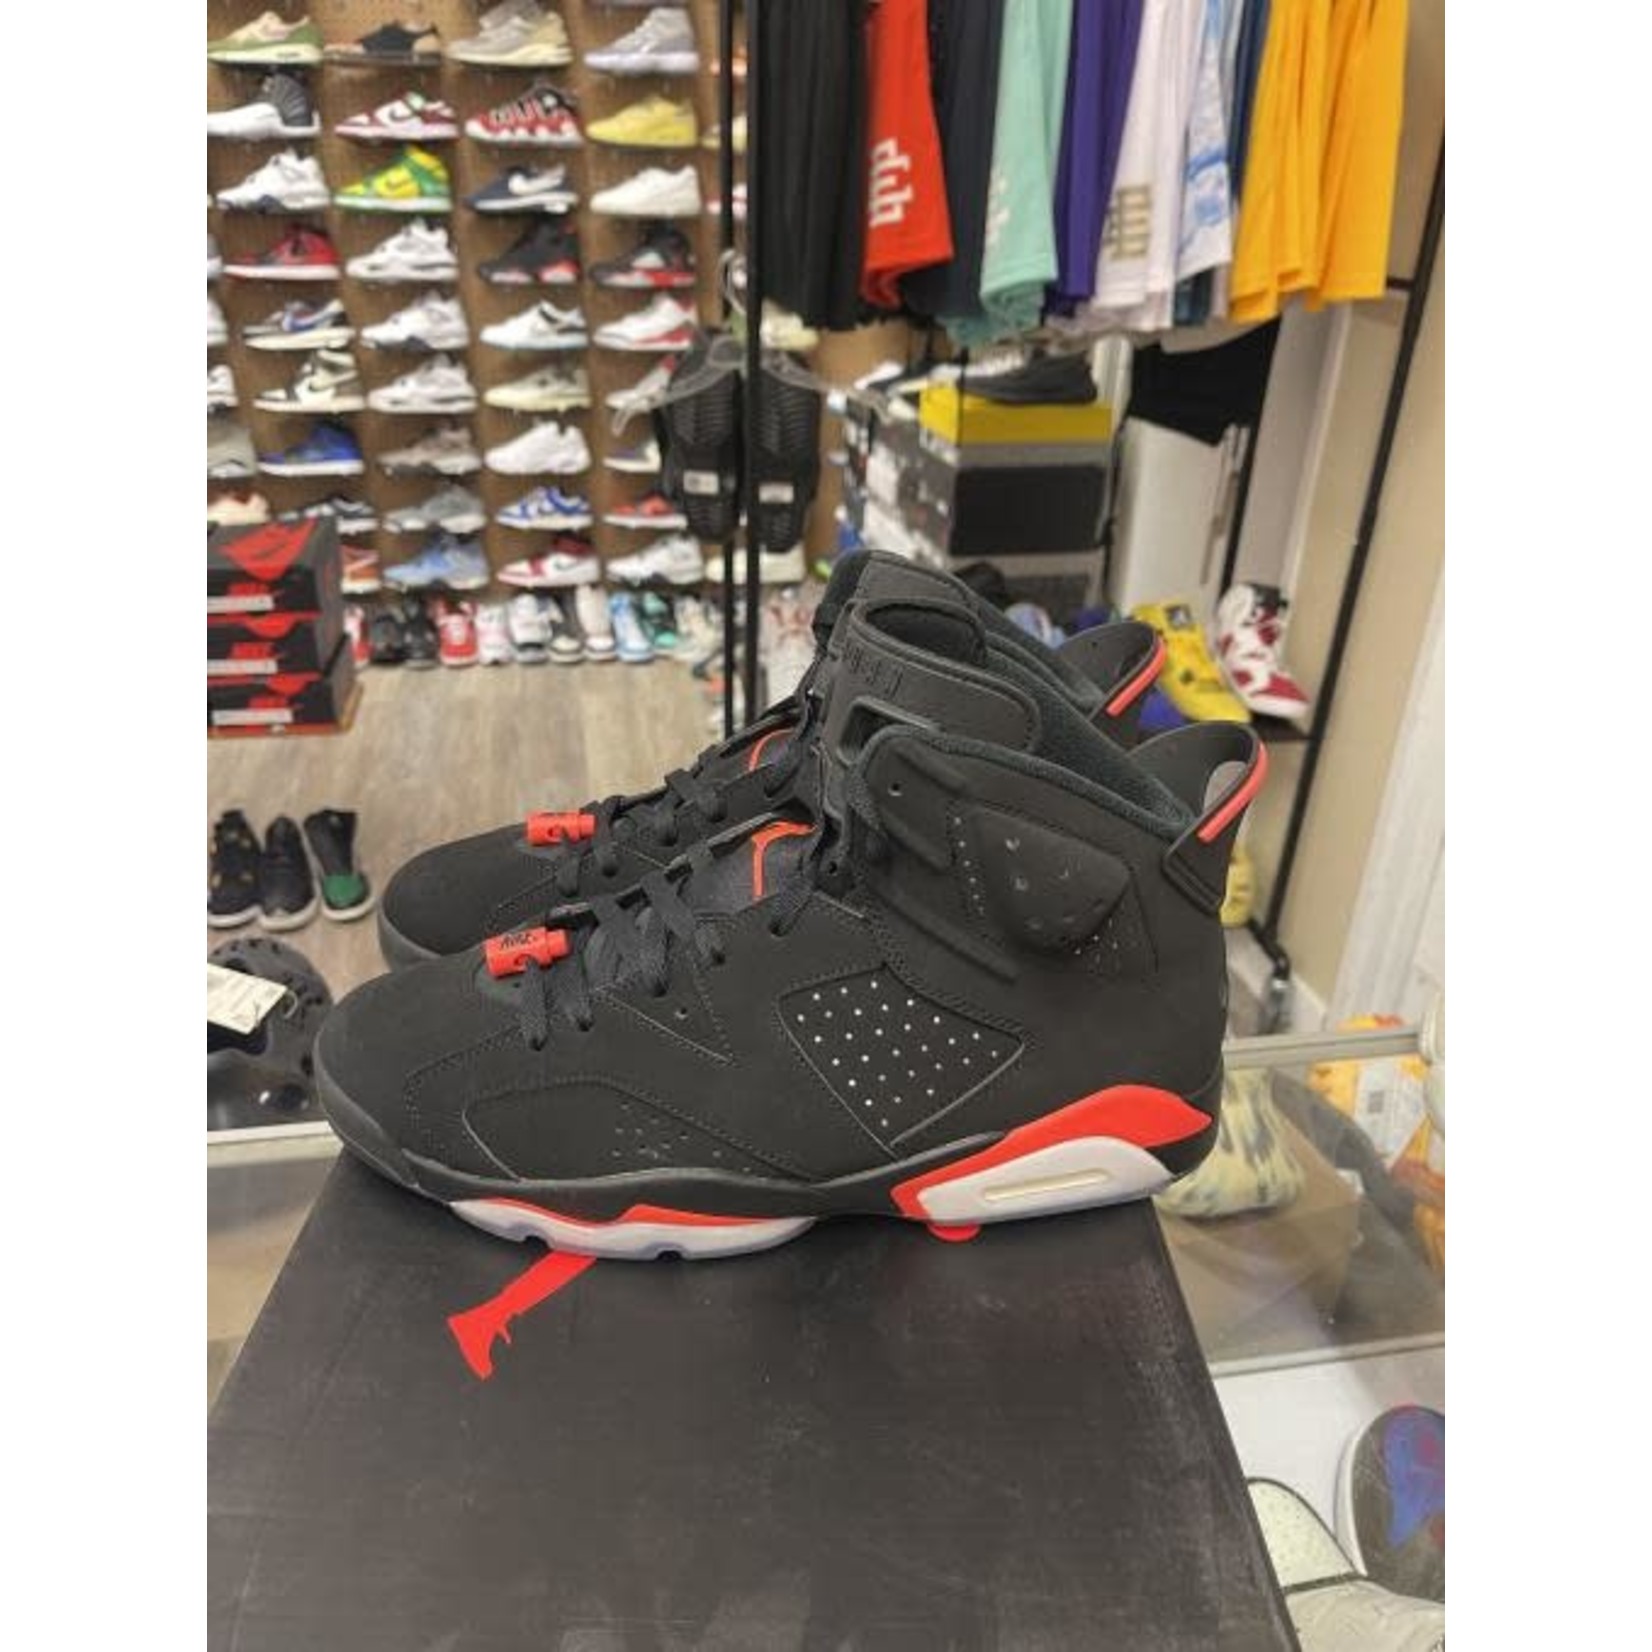 Jordan Jordan 6 Retro Black Infrared (2019) Size 11, PREOWNED